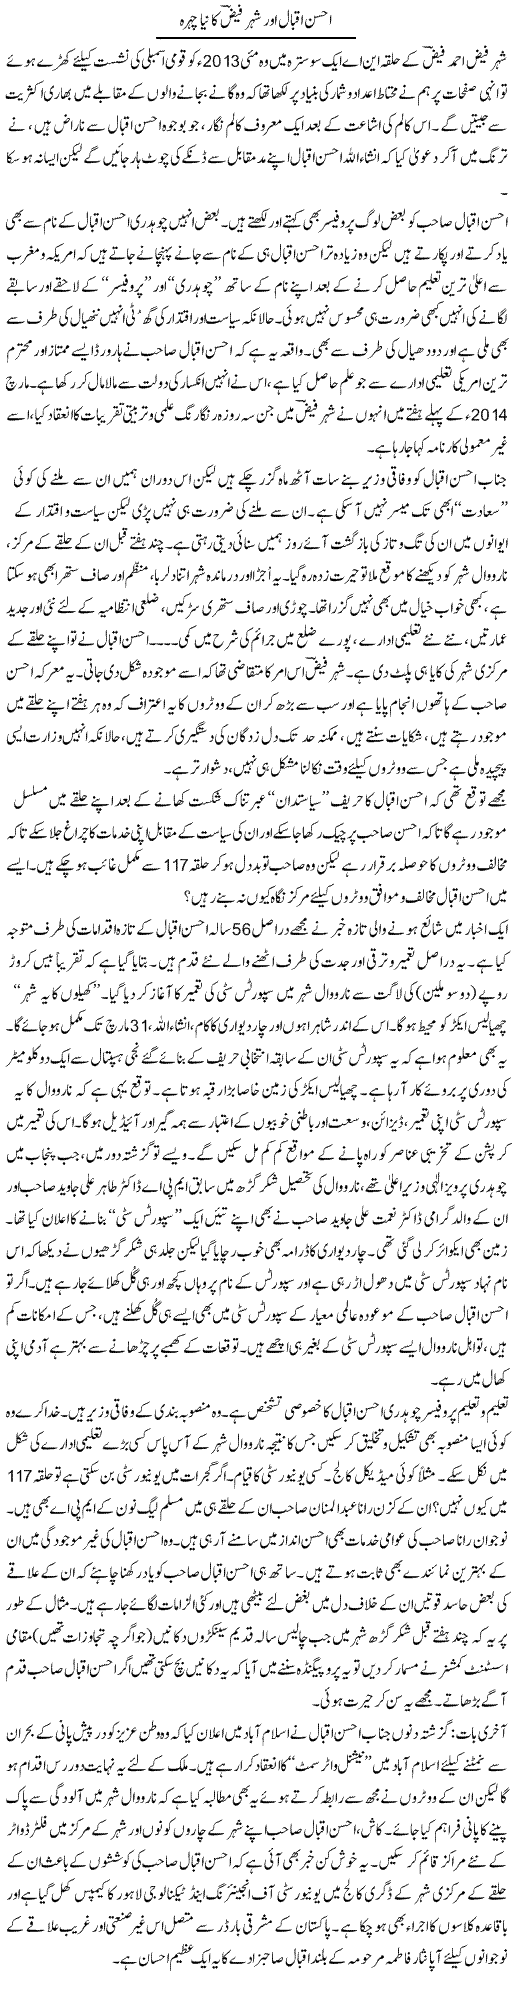 Ahsan Iqbal Our Shehr Faiz Ka Naya Chehra | Tanveer Qaisar Shahid | Daily Urdu Columns